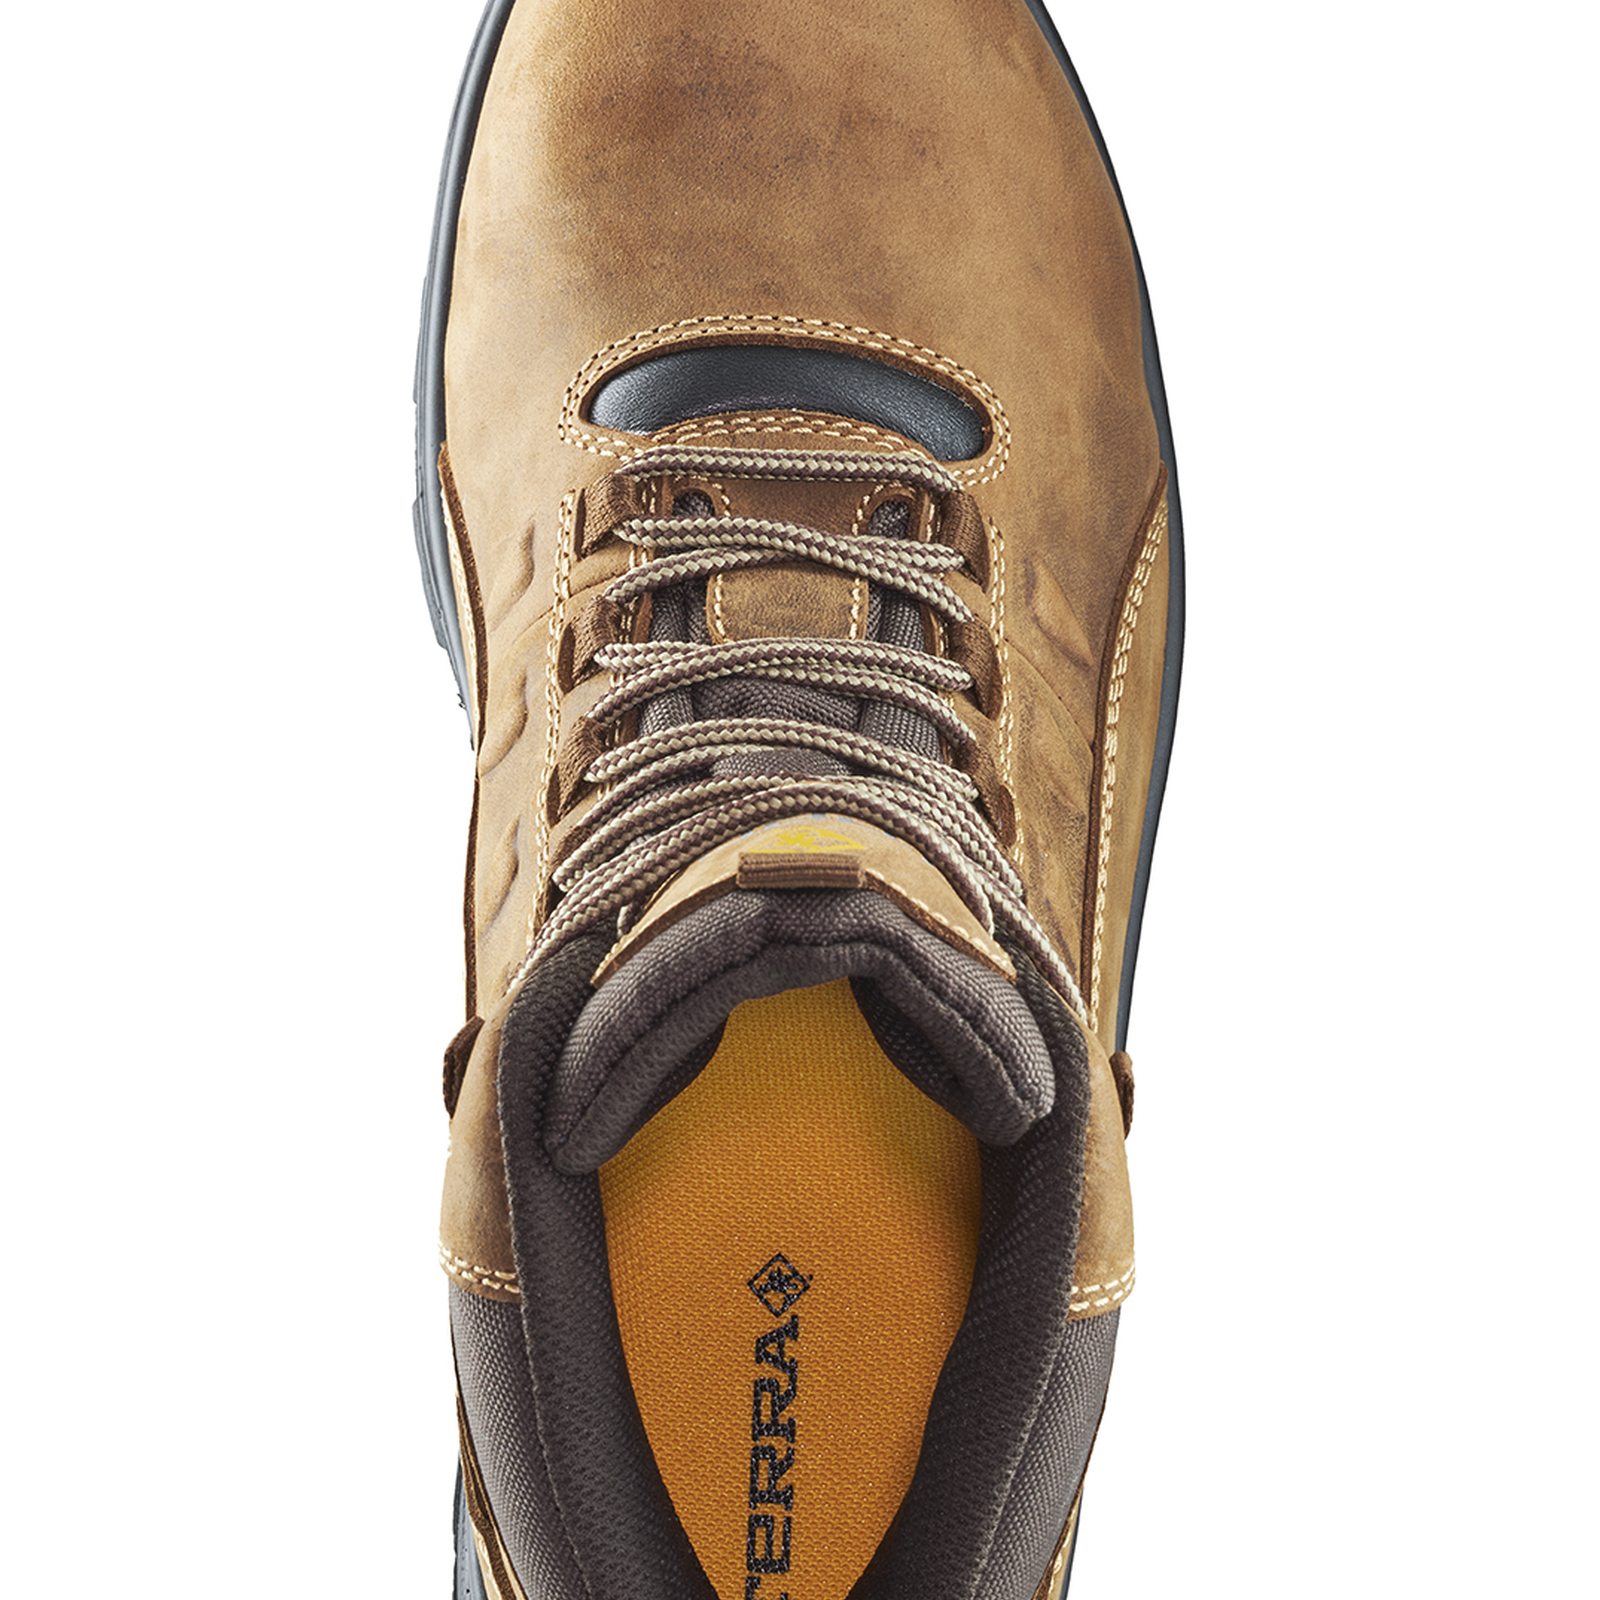 Terra Men's Findlay 6" Soft Toe WP Work Boot -Brown- 4NS7BN  - Overlook Boots